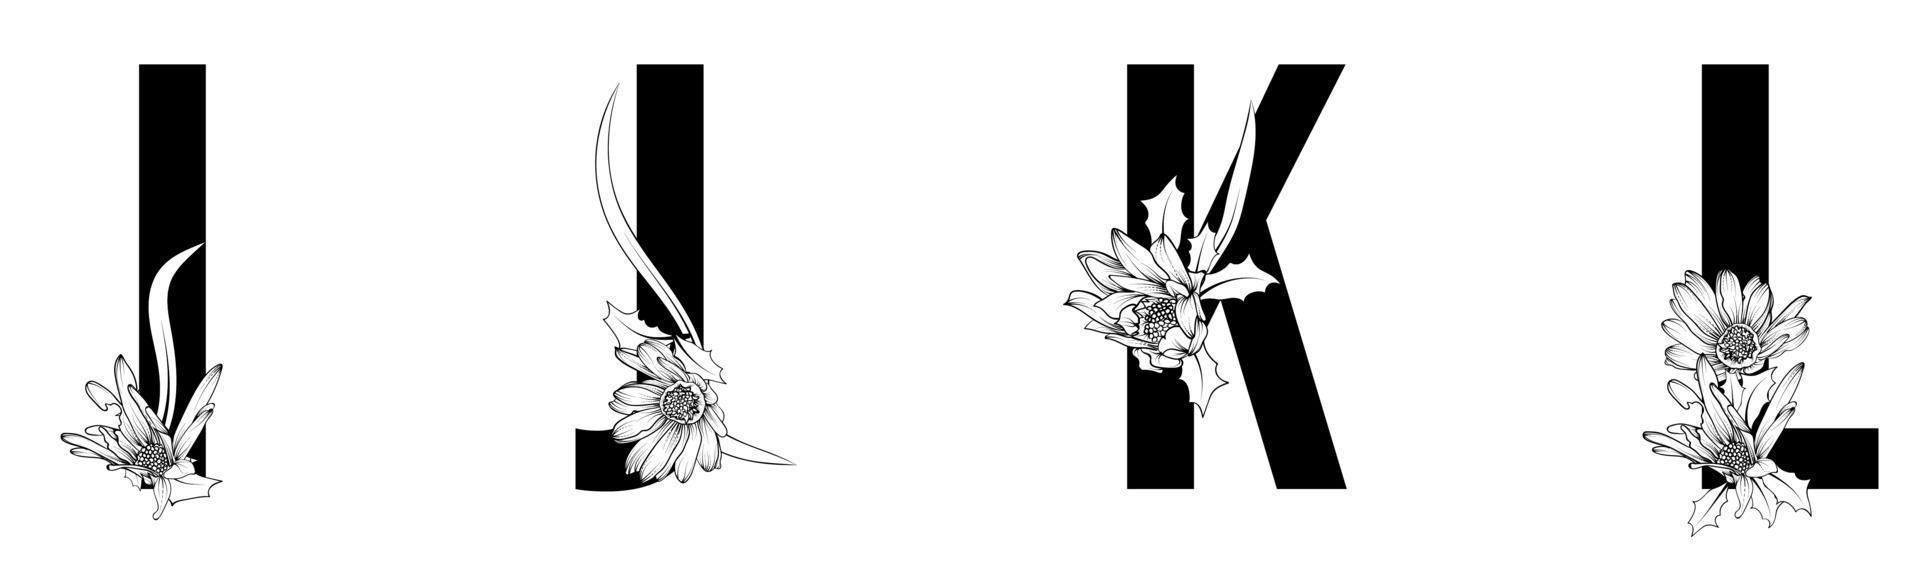 letras florais preto e branco vetor